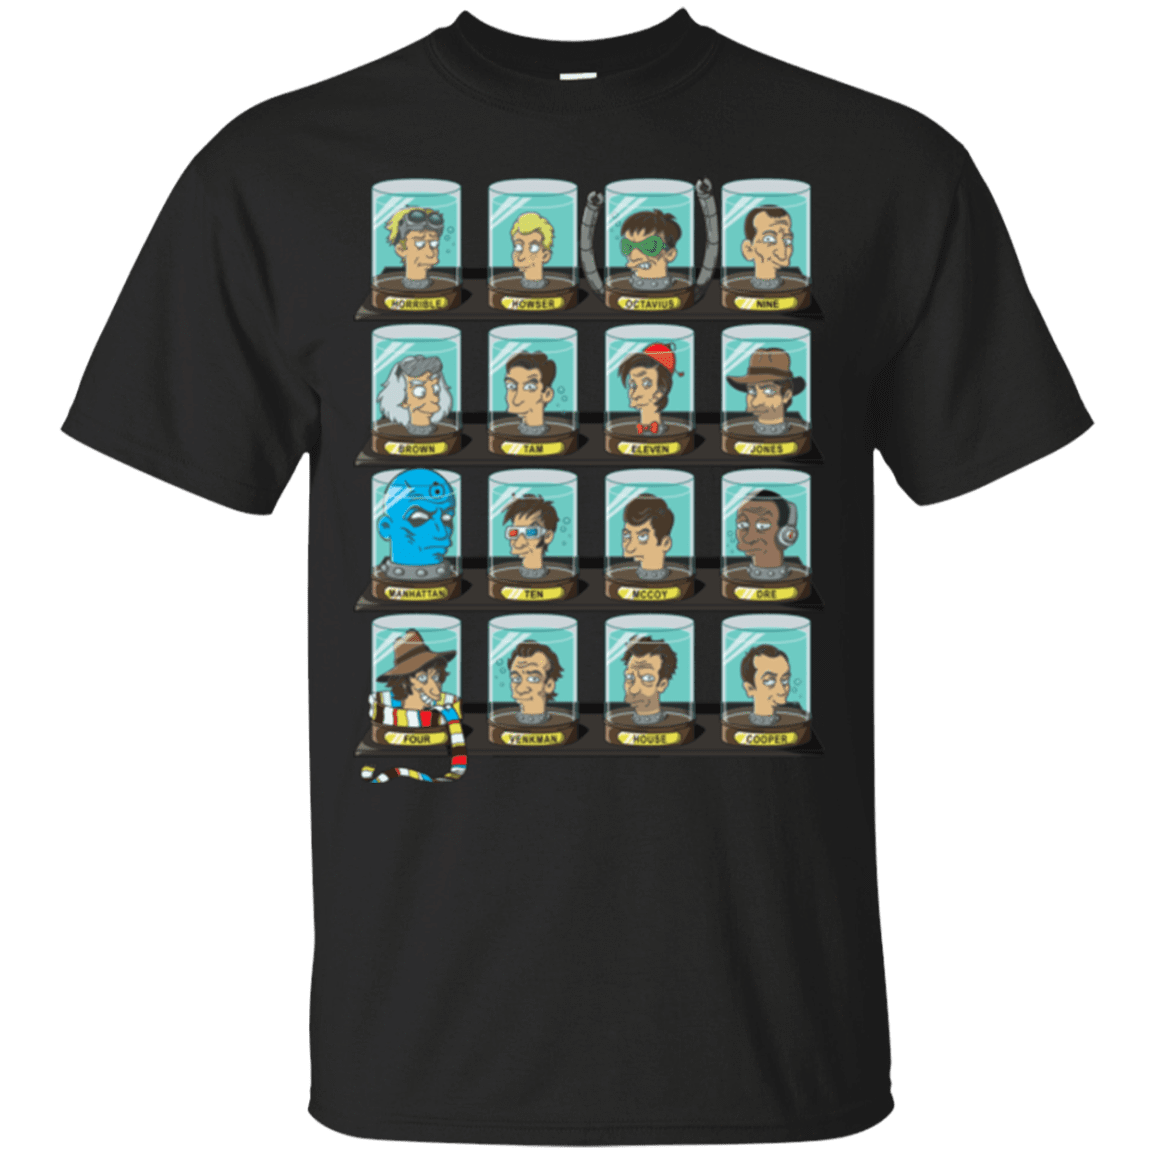 T-Shirts Black / Small Doctorama T-Shirt